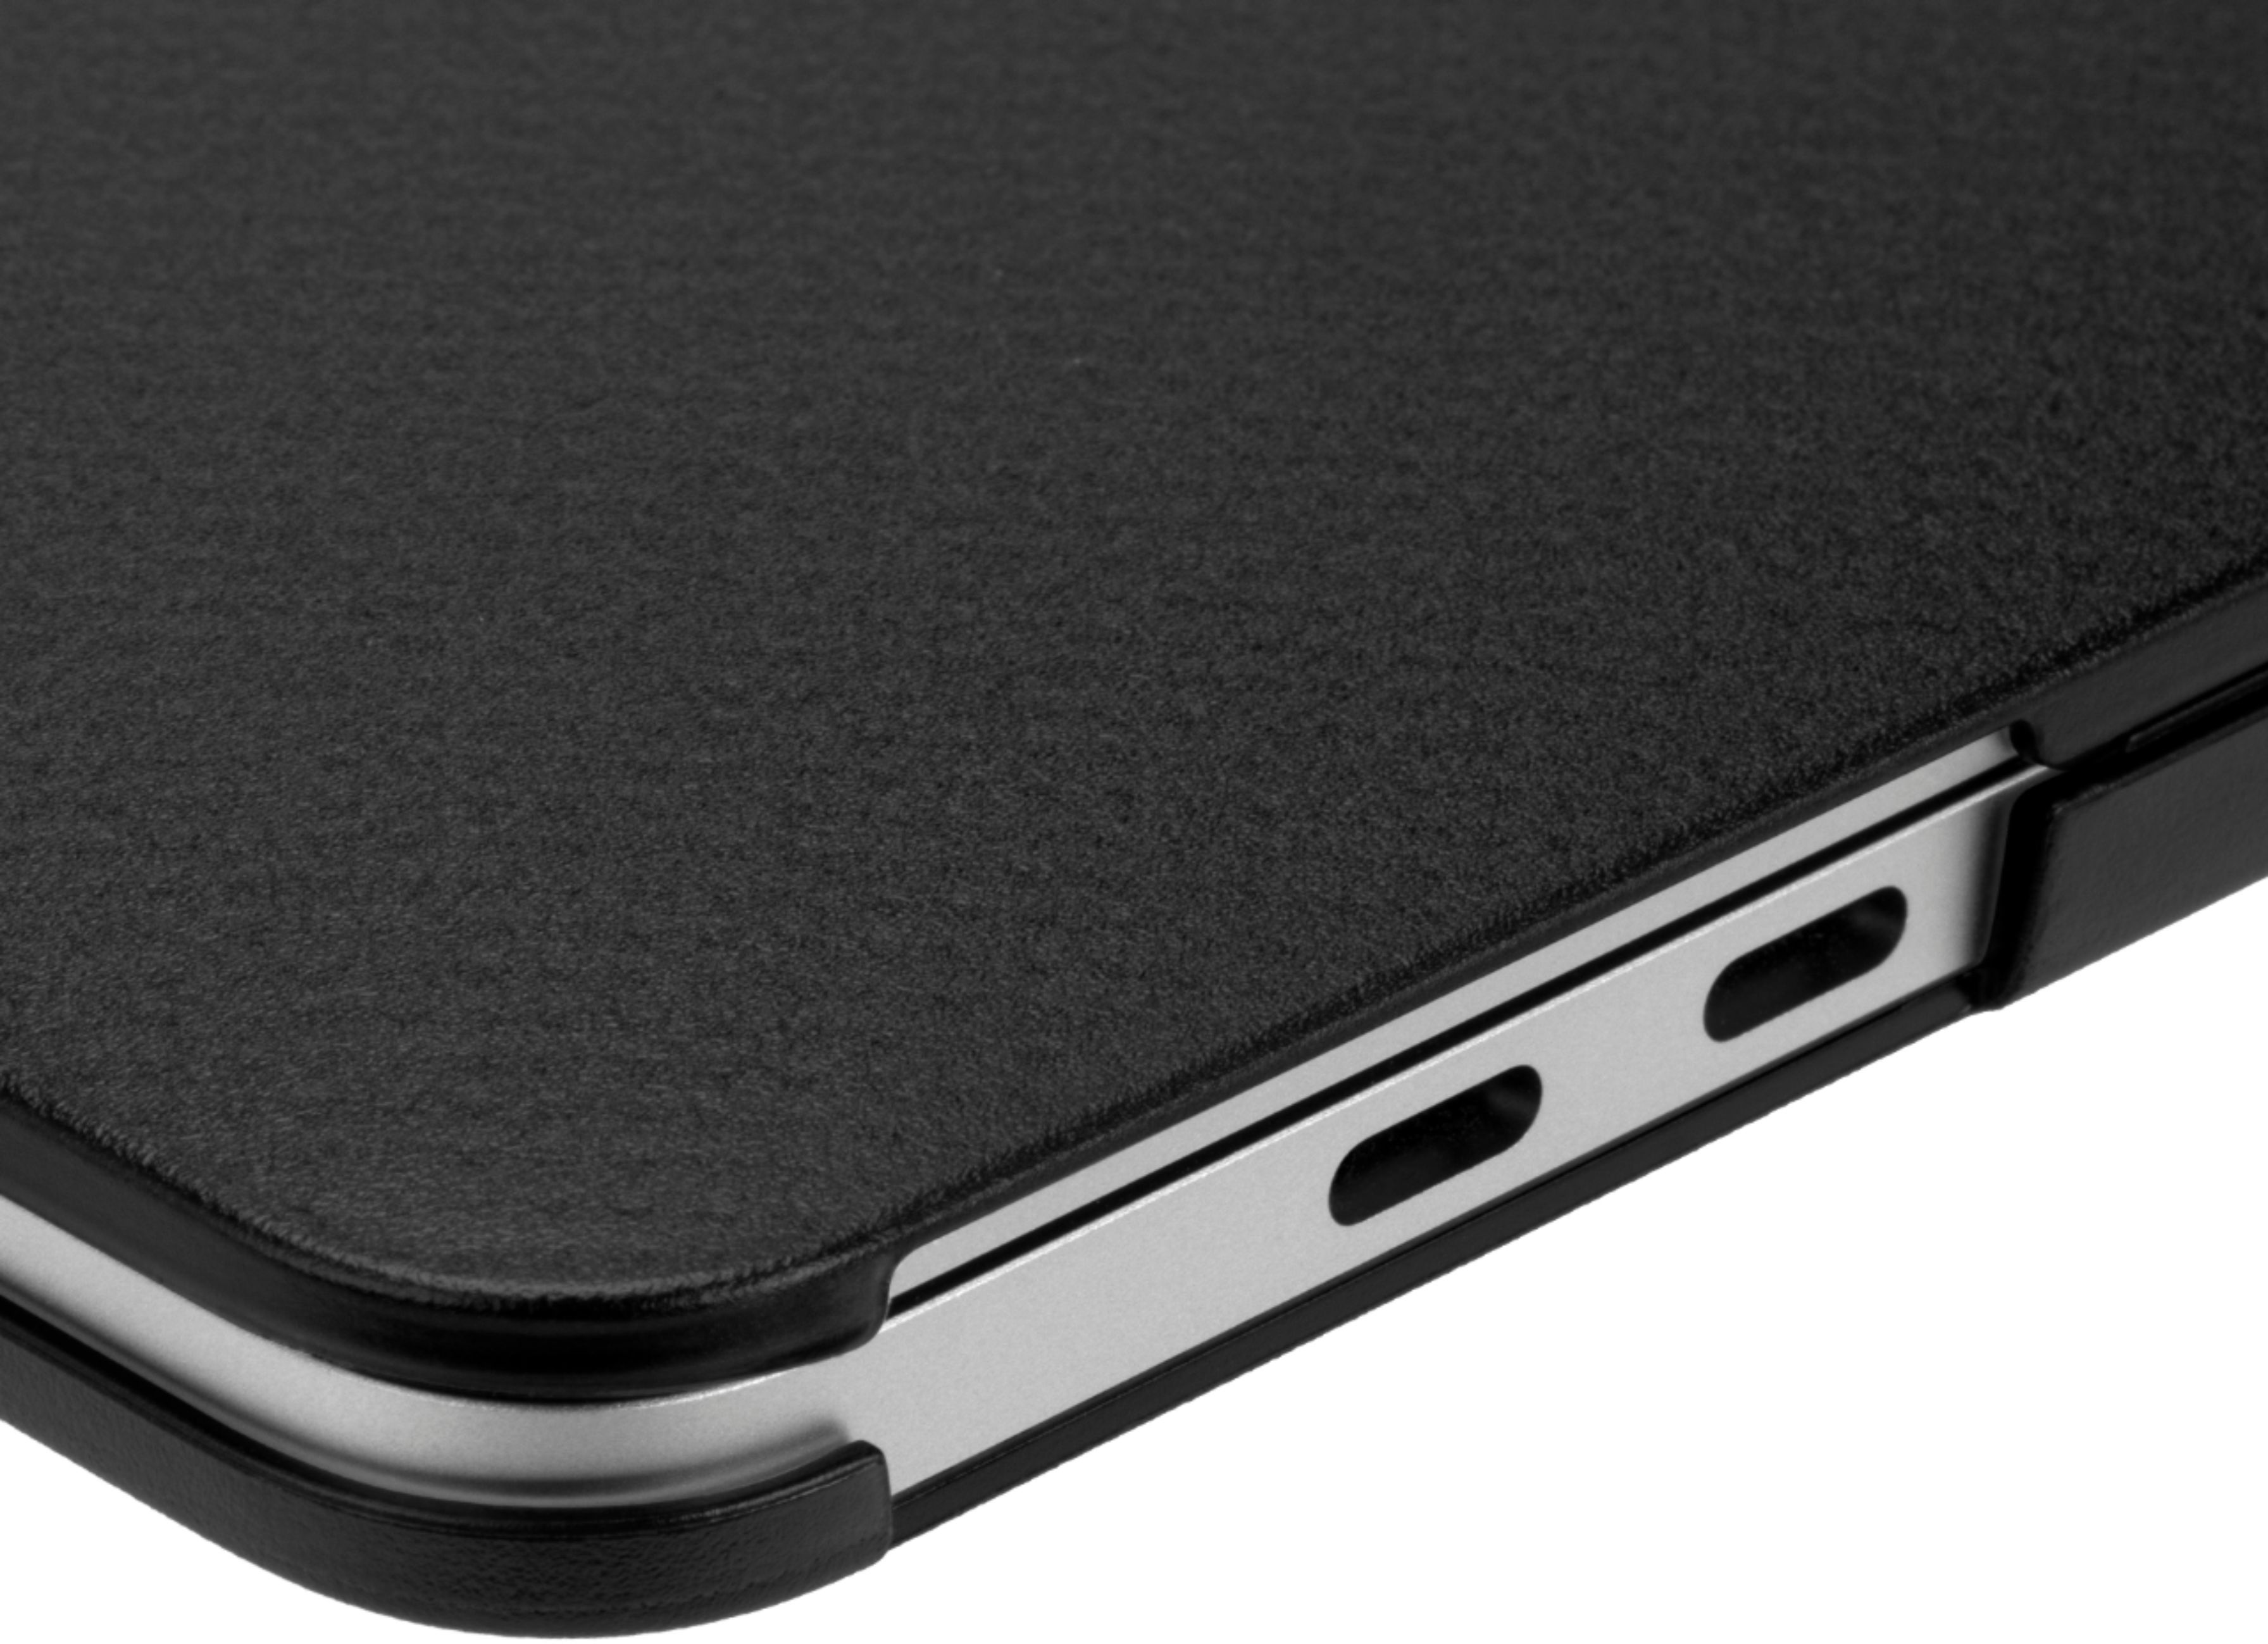 Housse INCASE MacBook Pro Retina 13'' Compact noir